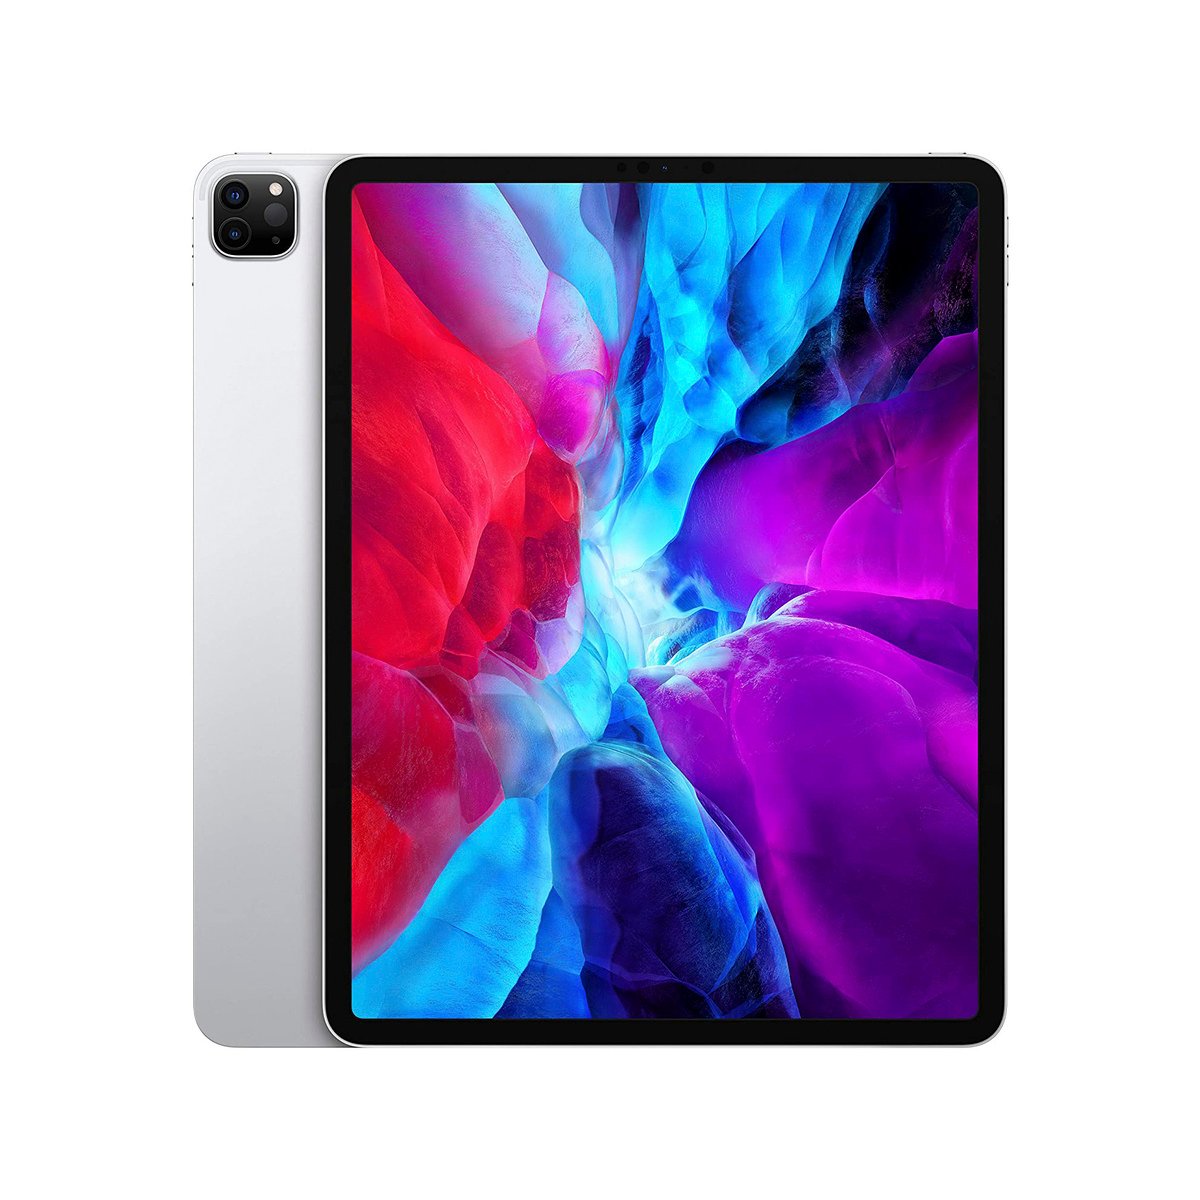 Apple iPad Pro (12.9-inch, Wi-Fi, 128GB) - Silver (4th Generation)